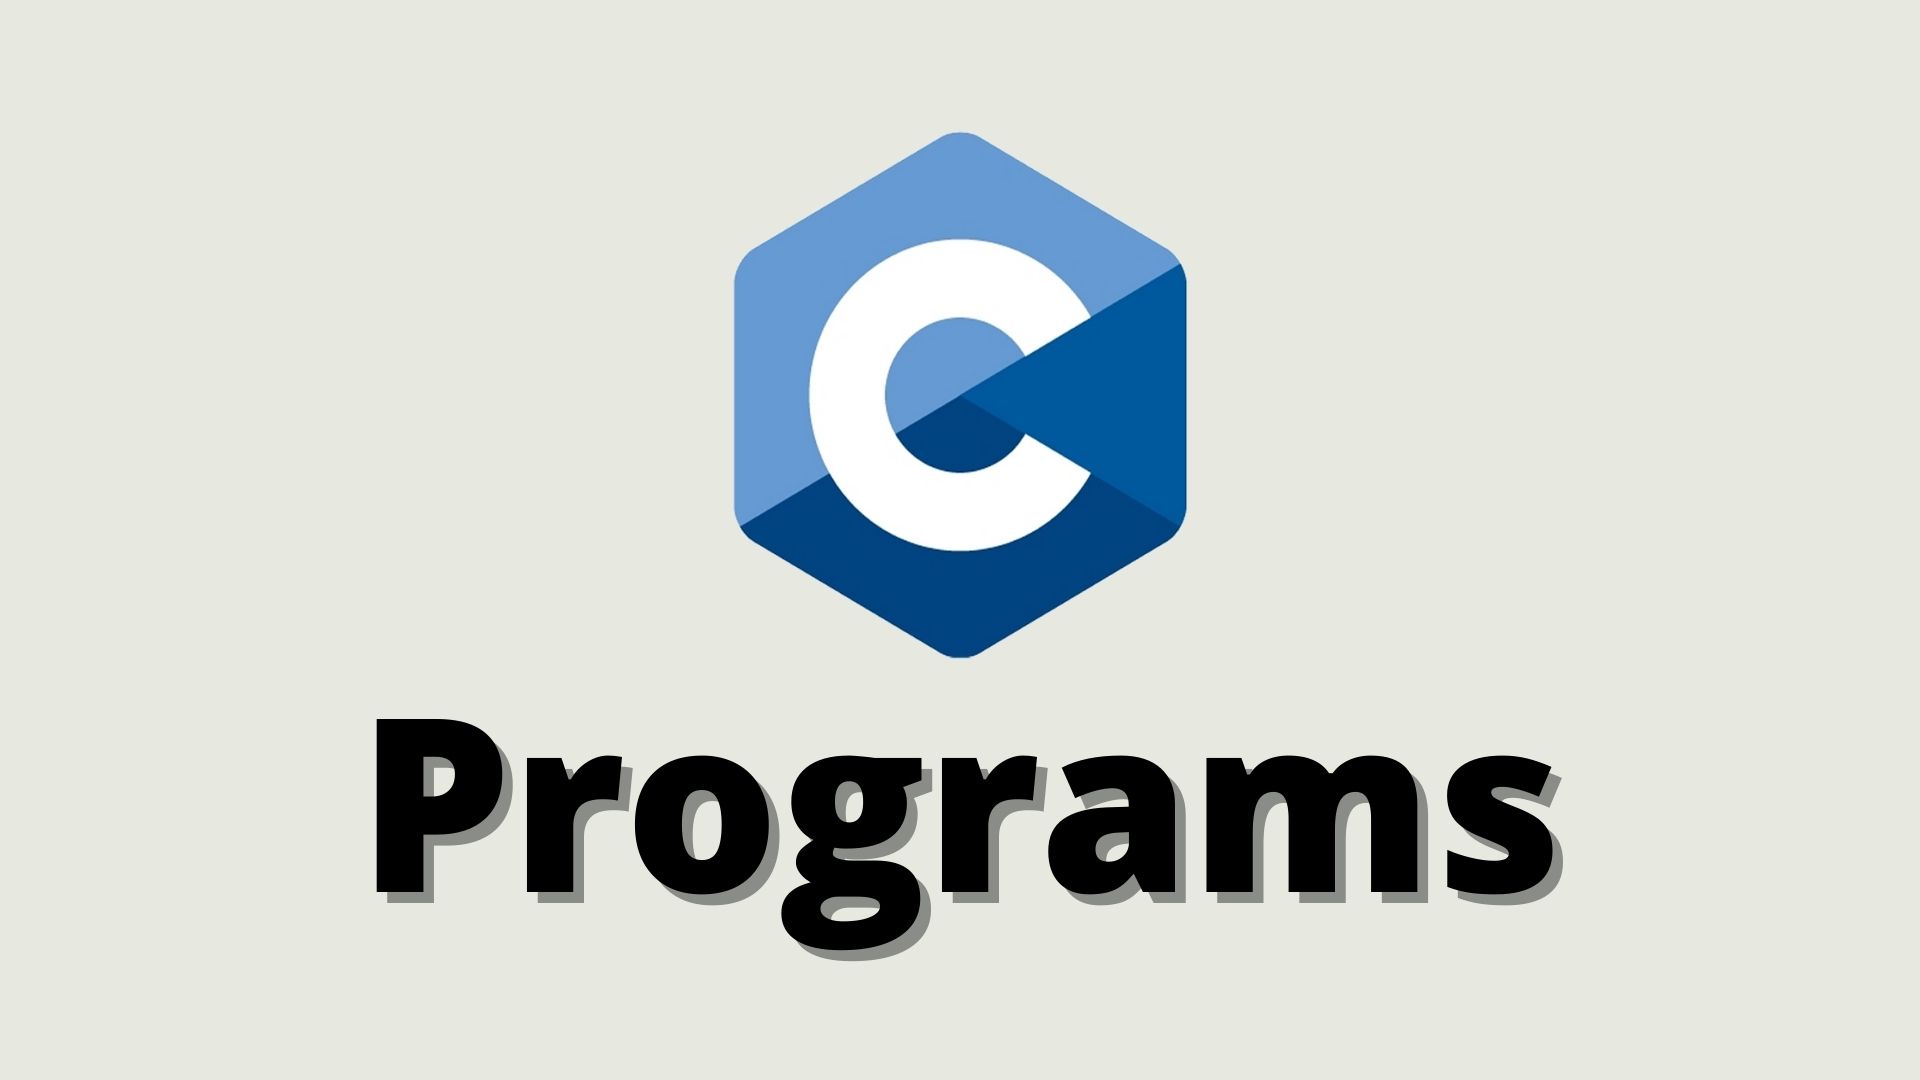 c programming logo hd